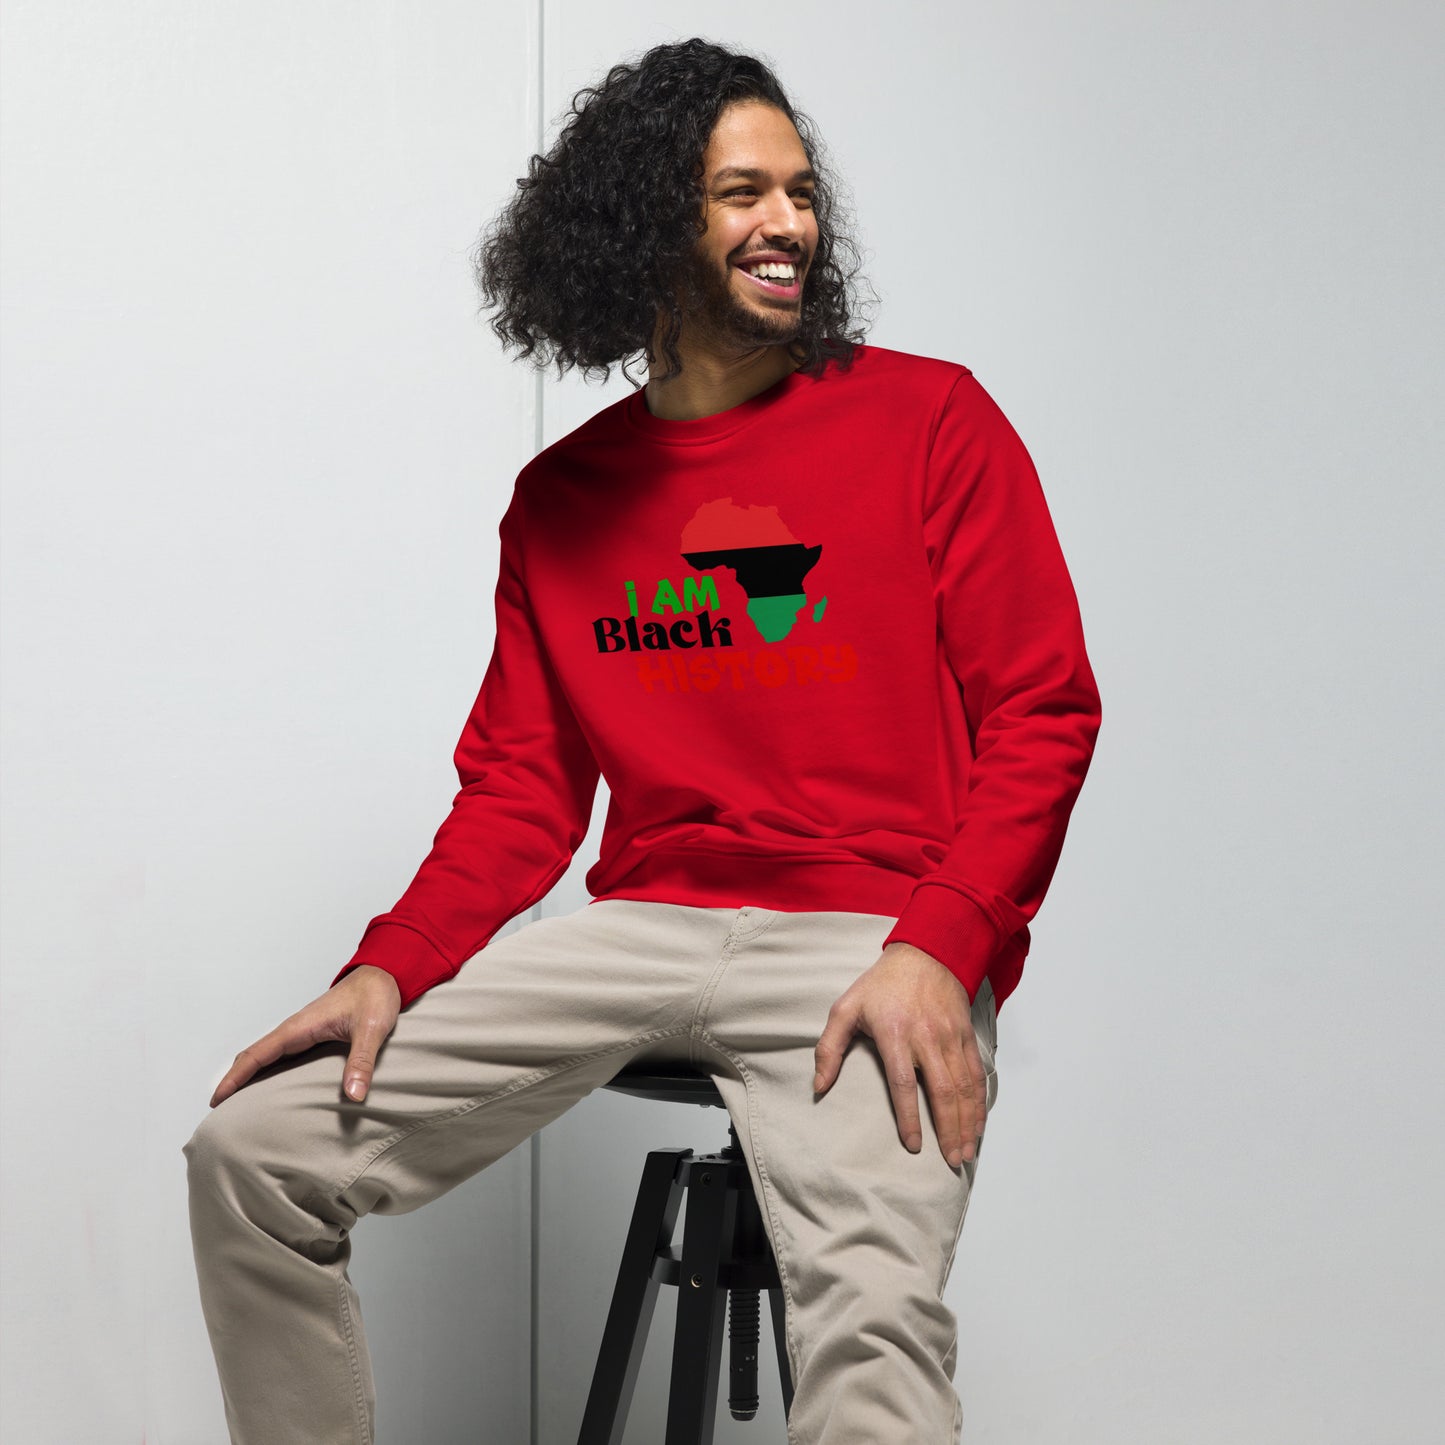 Unisex organic sweatshirt - I Am Black History